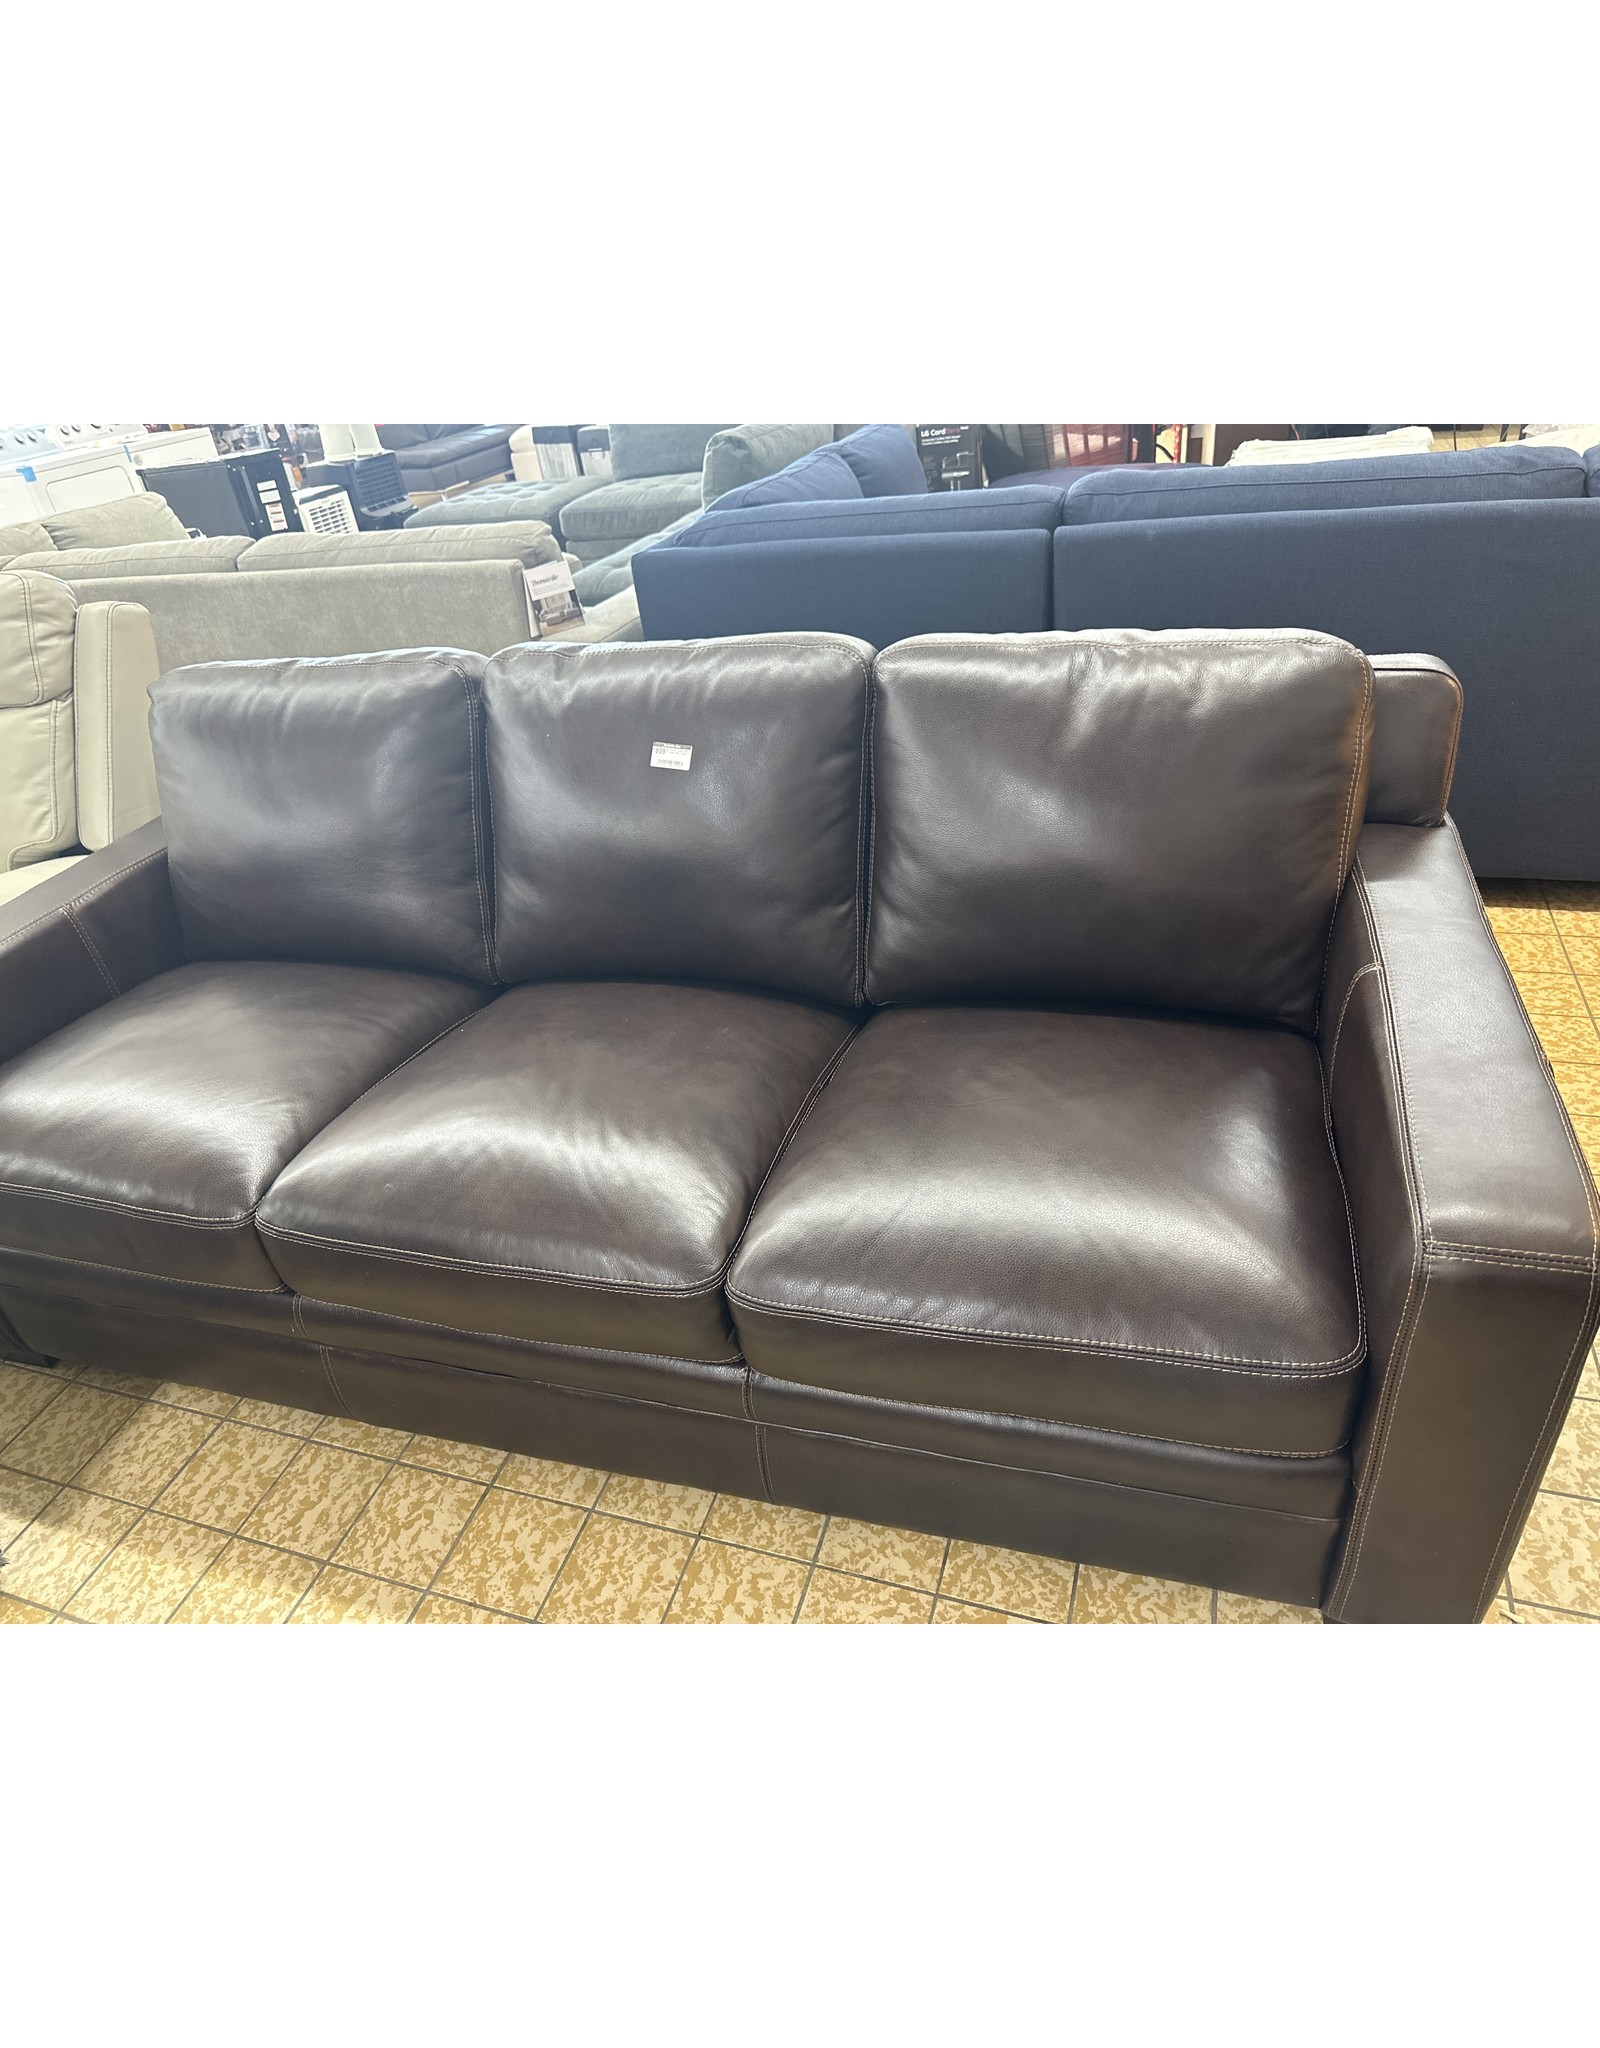 Chanton Leather Sofa brown color 3 seats